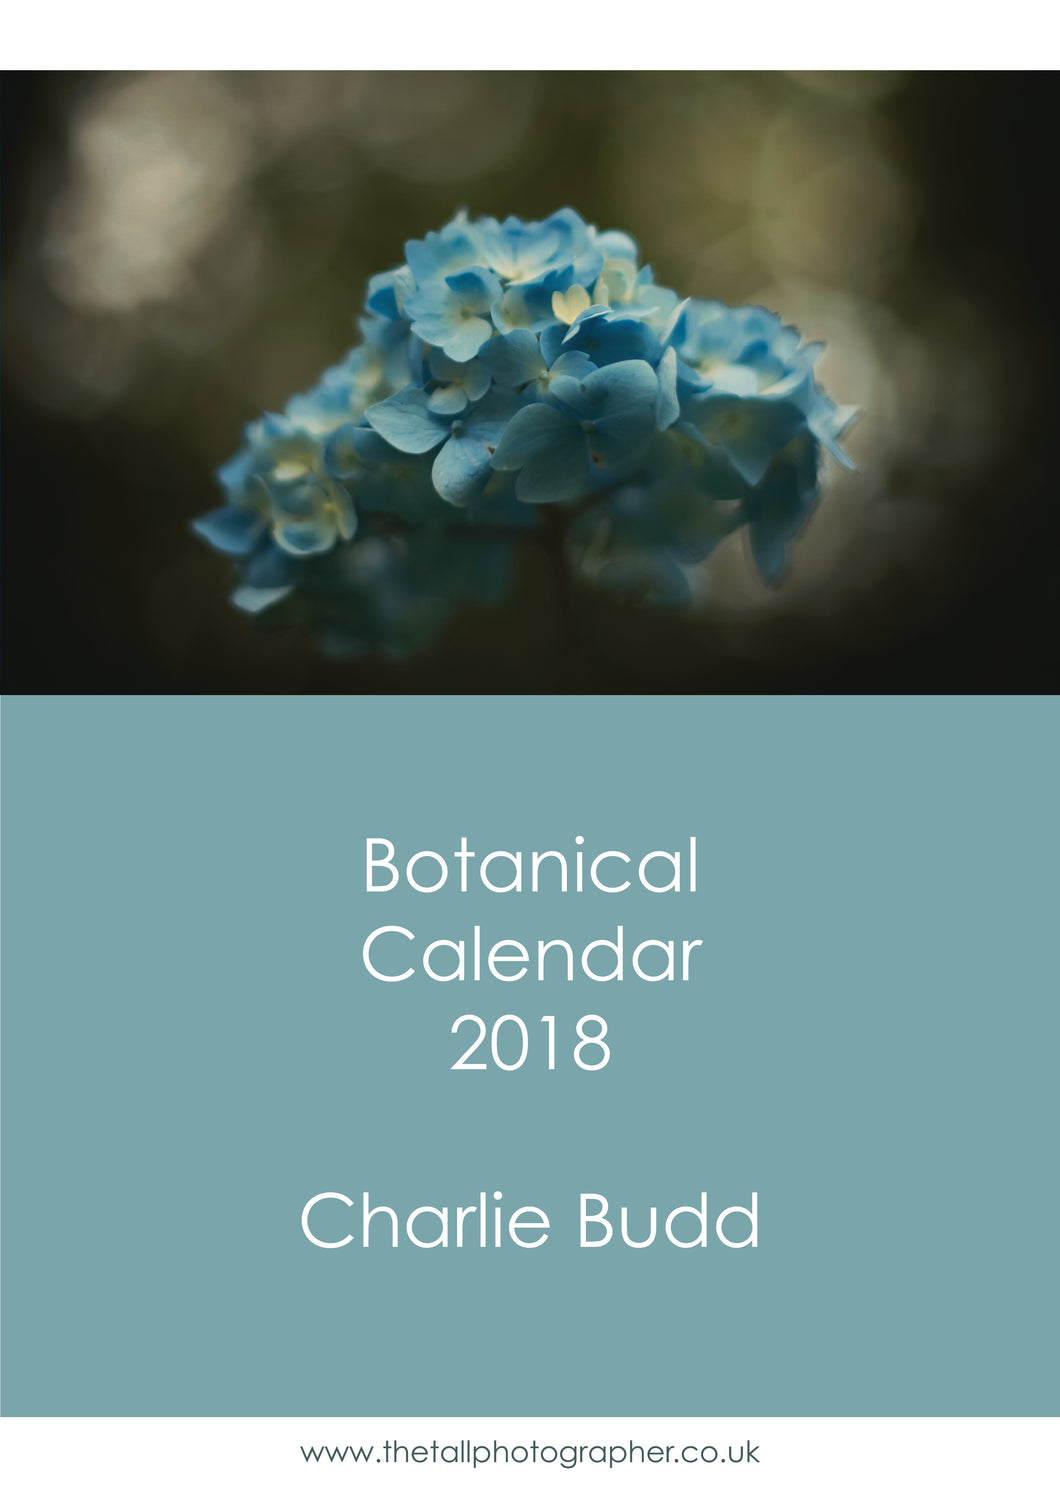 Botanical Calendar - Posted To You